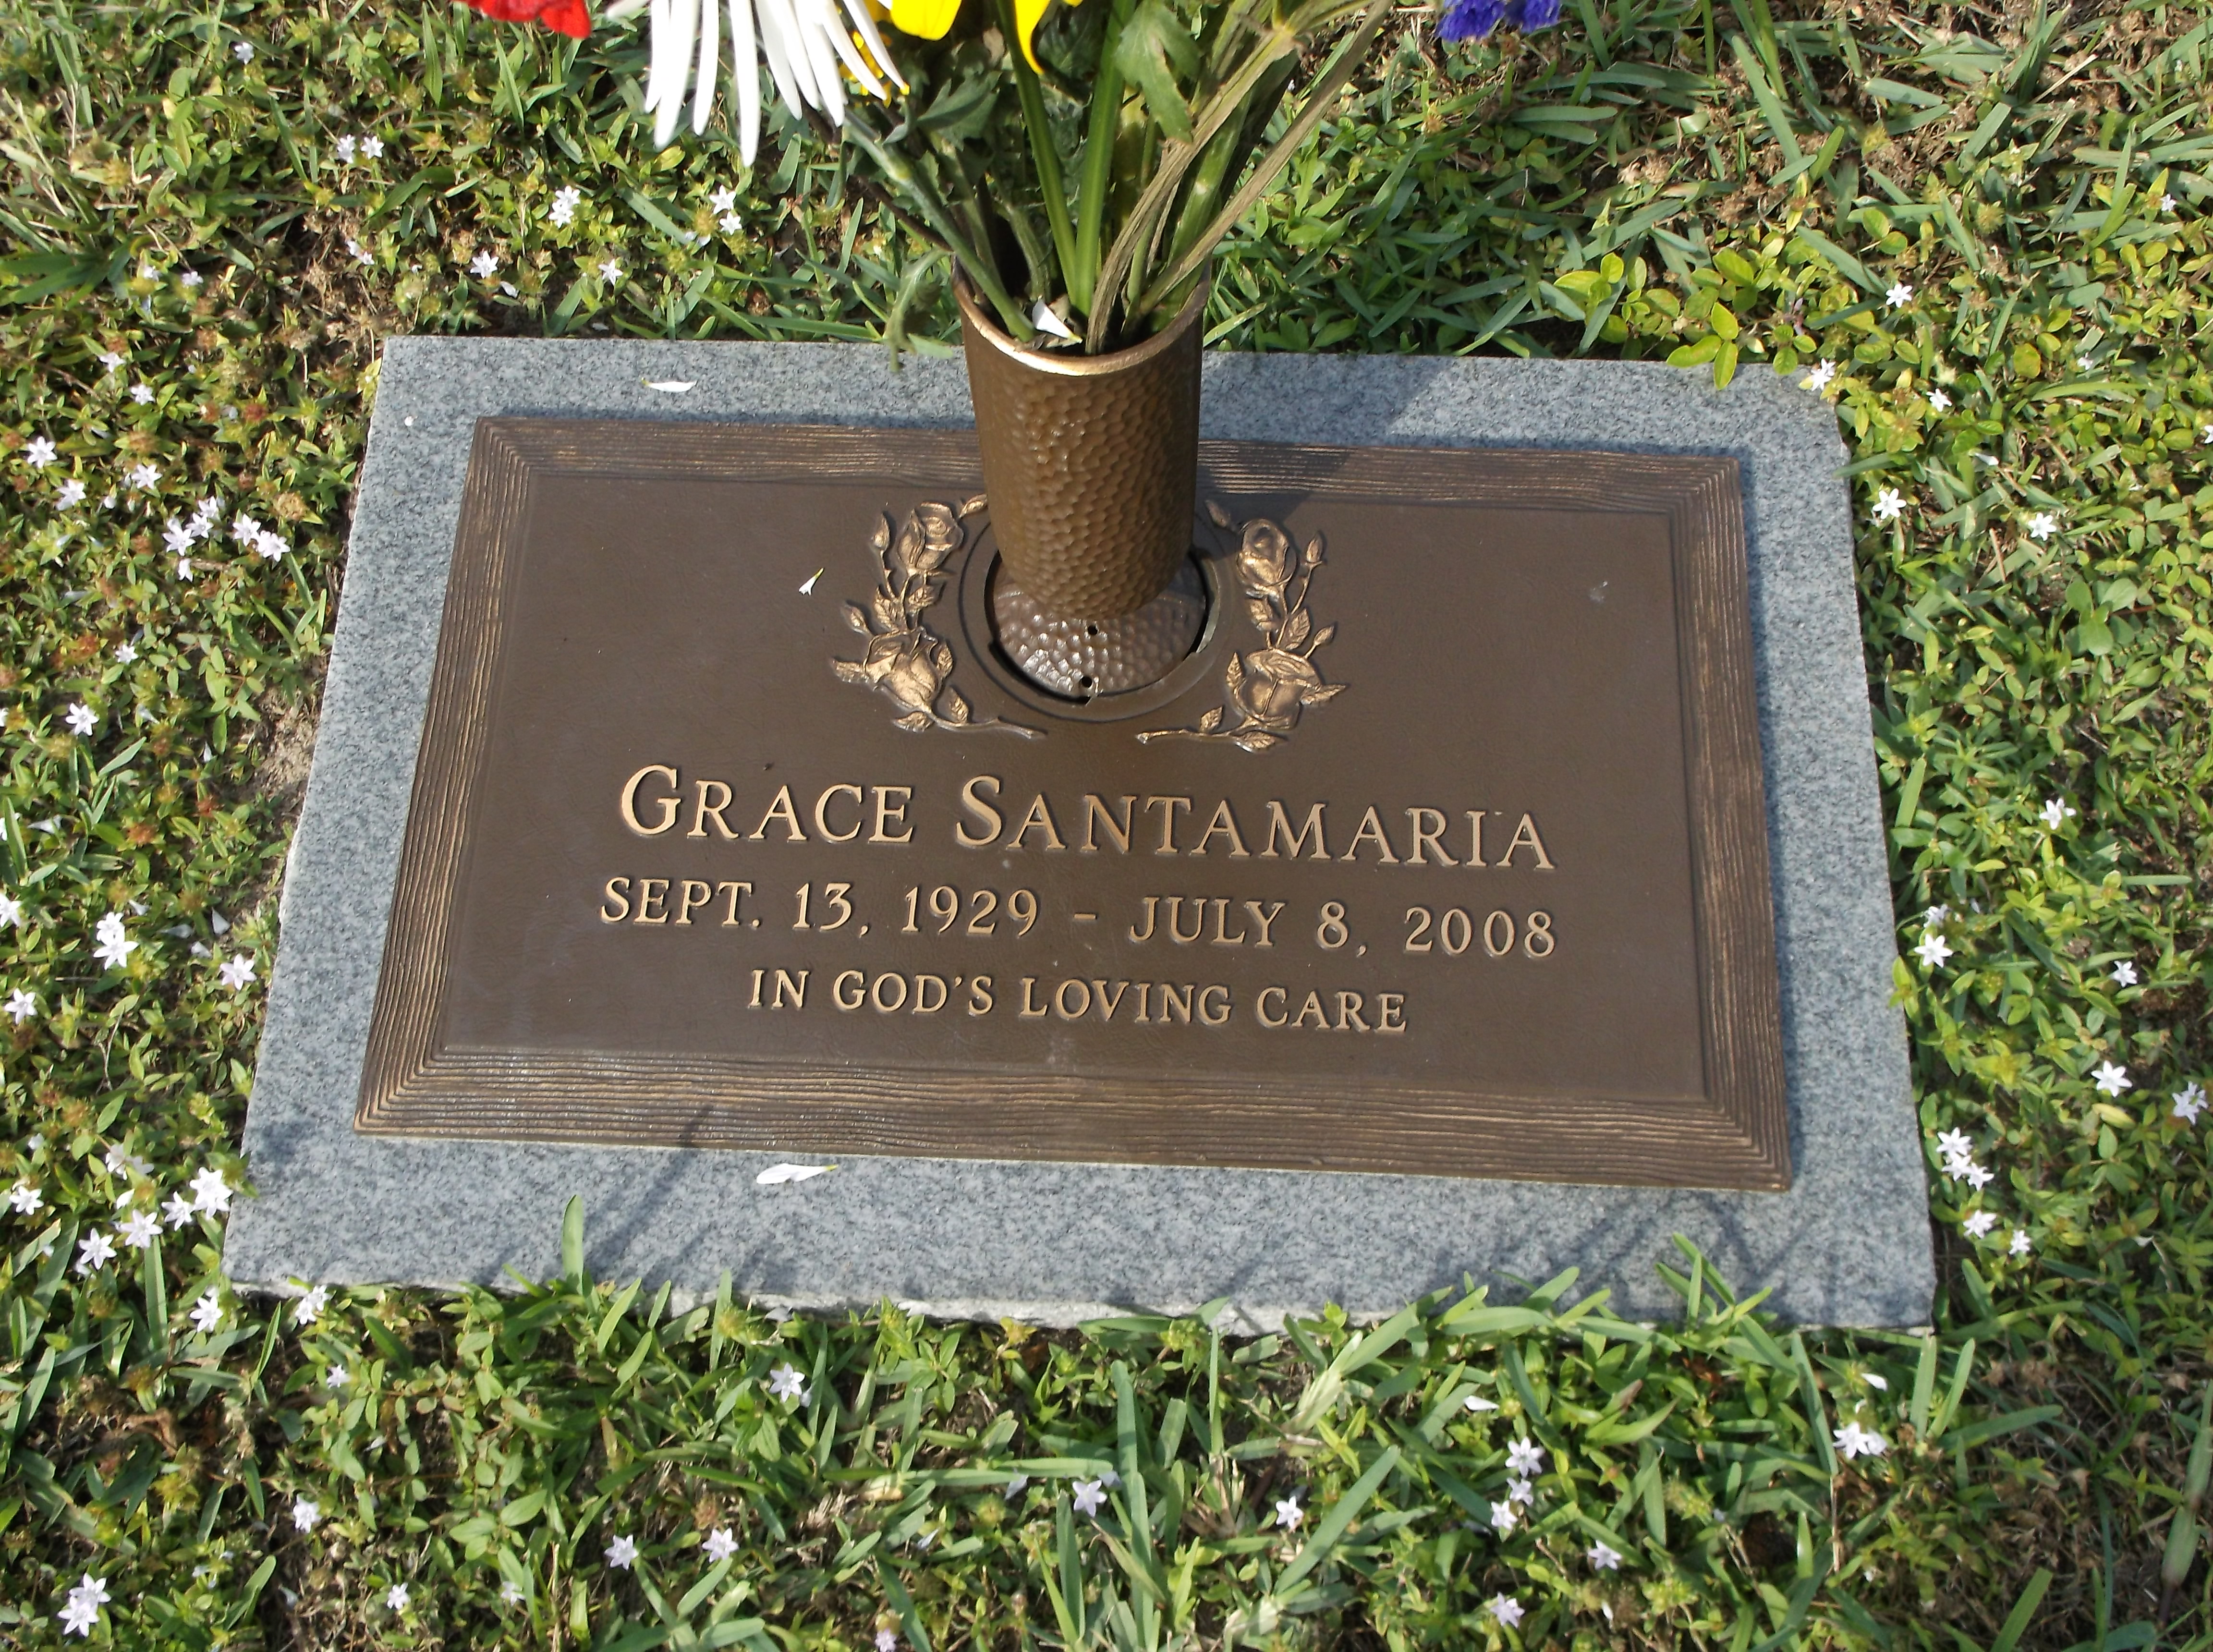 Grace Santamaria